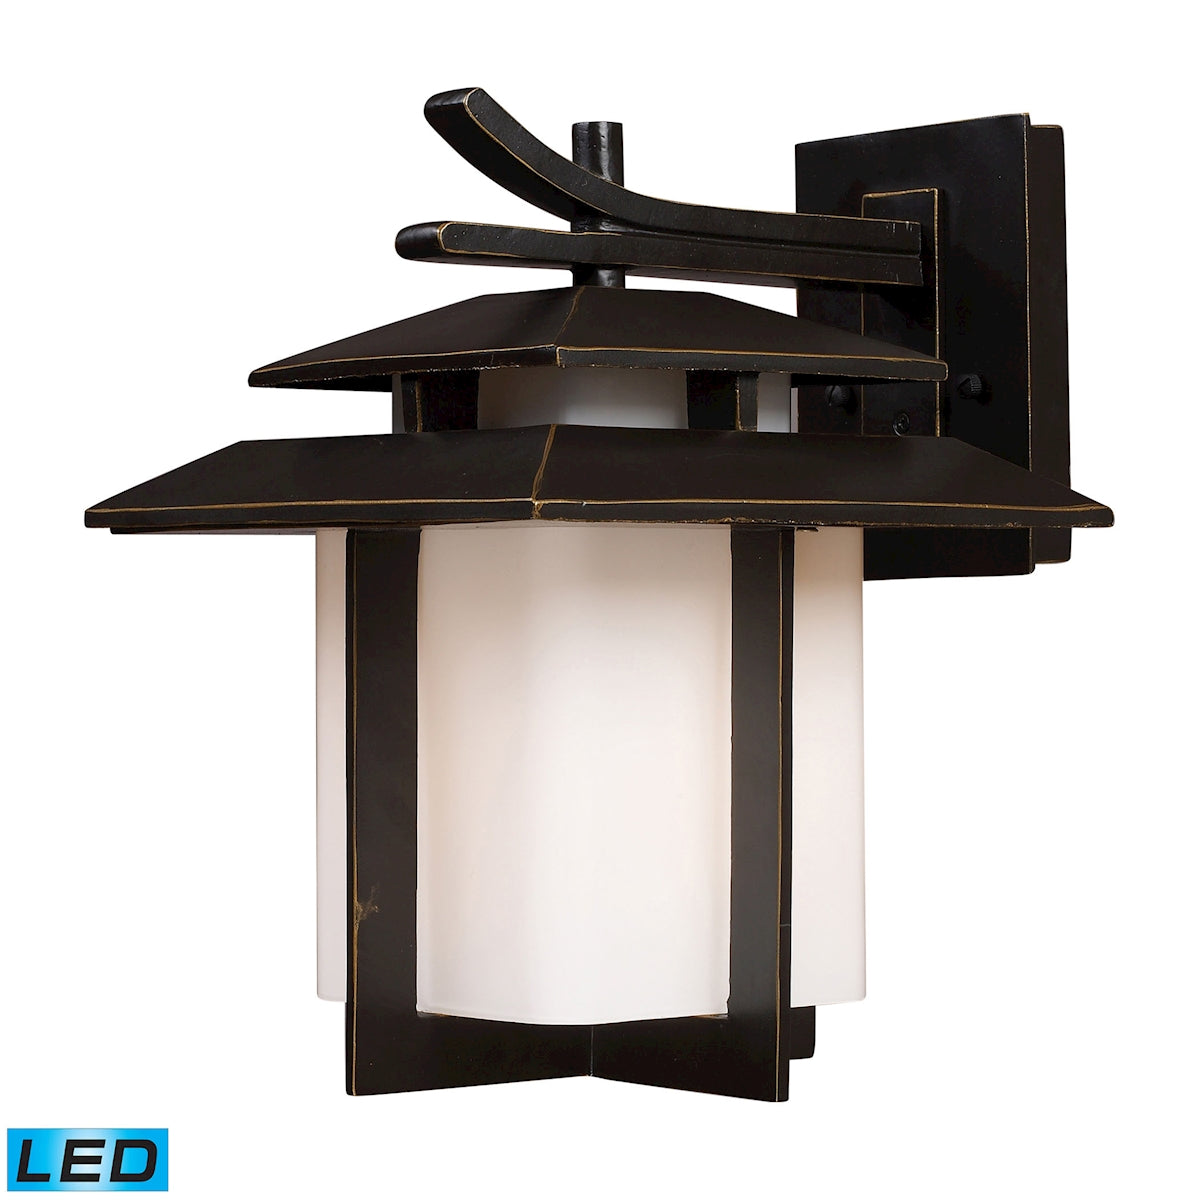 ELK Lighting 42171/1-LED - Kanso 10" Wide 1-Light Outdoor Wall Lamp in Hazelnut Bronze - Includes LE